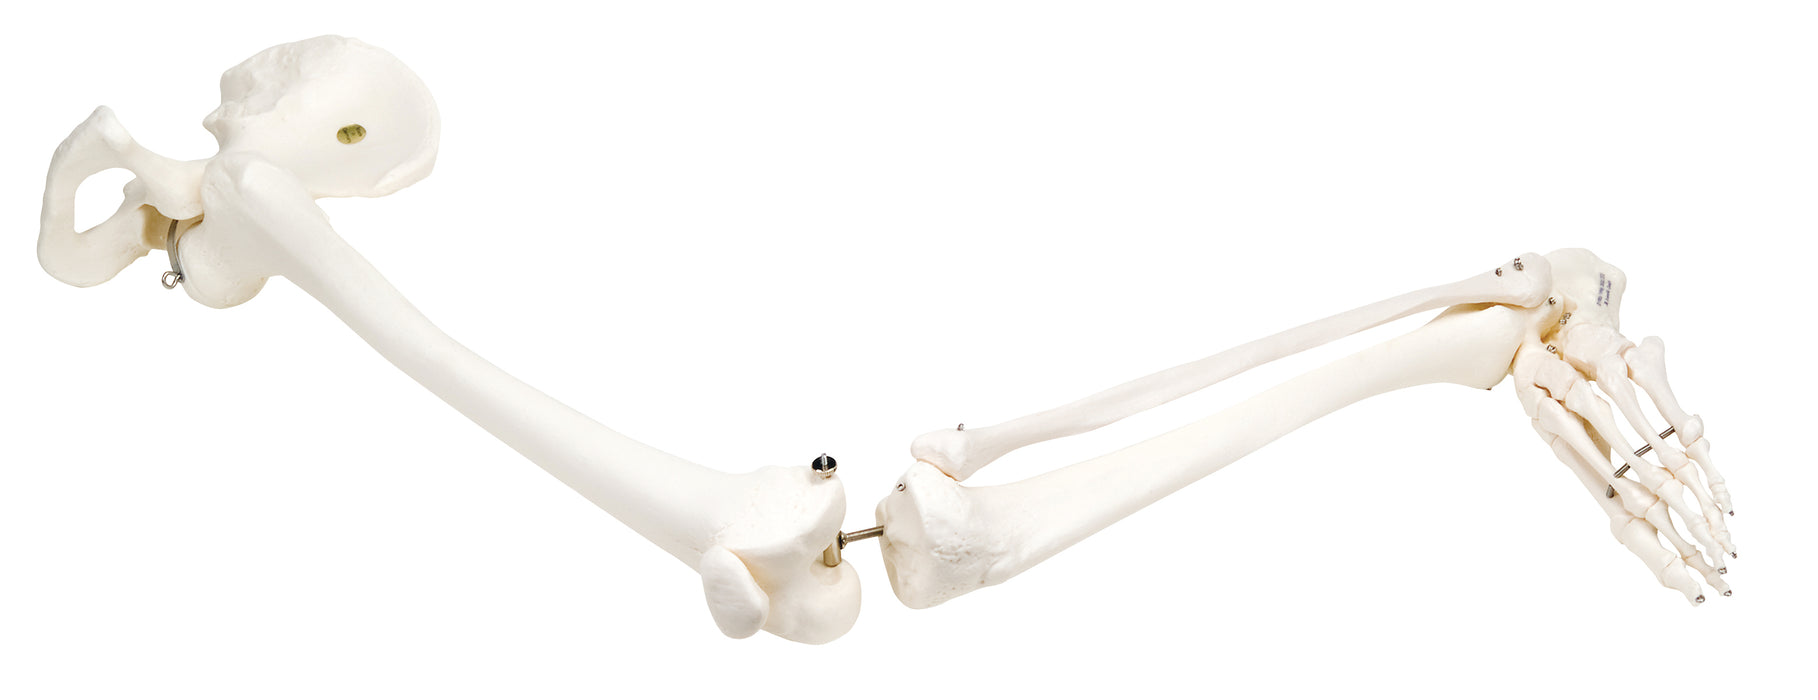 3B Scientific 12-4587L Anatomical Model - Loose Bones, Leg Skeleton With Hip (Wire) - Includes 3B Smart Anatomy